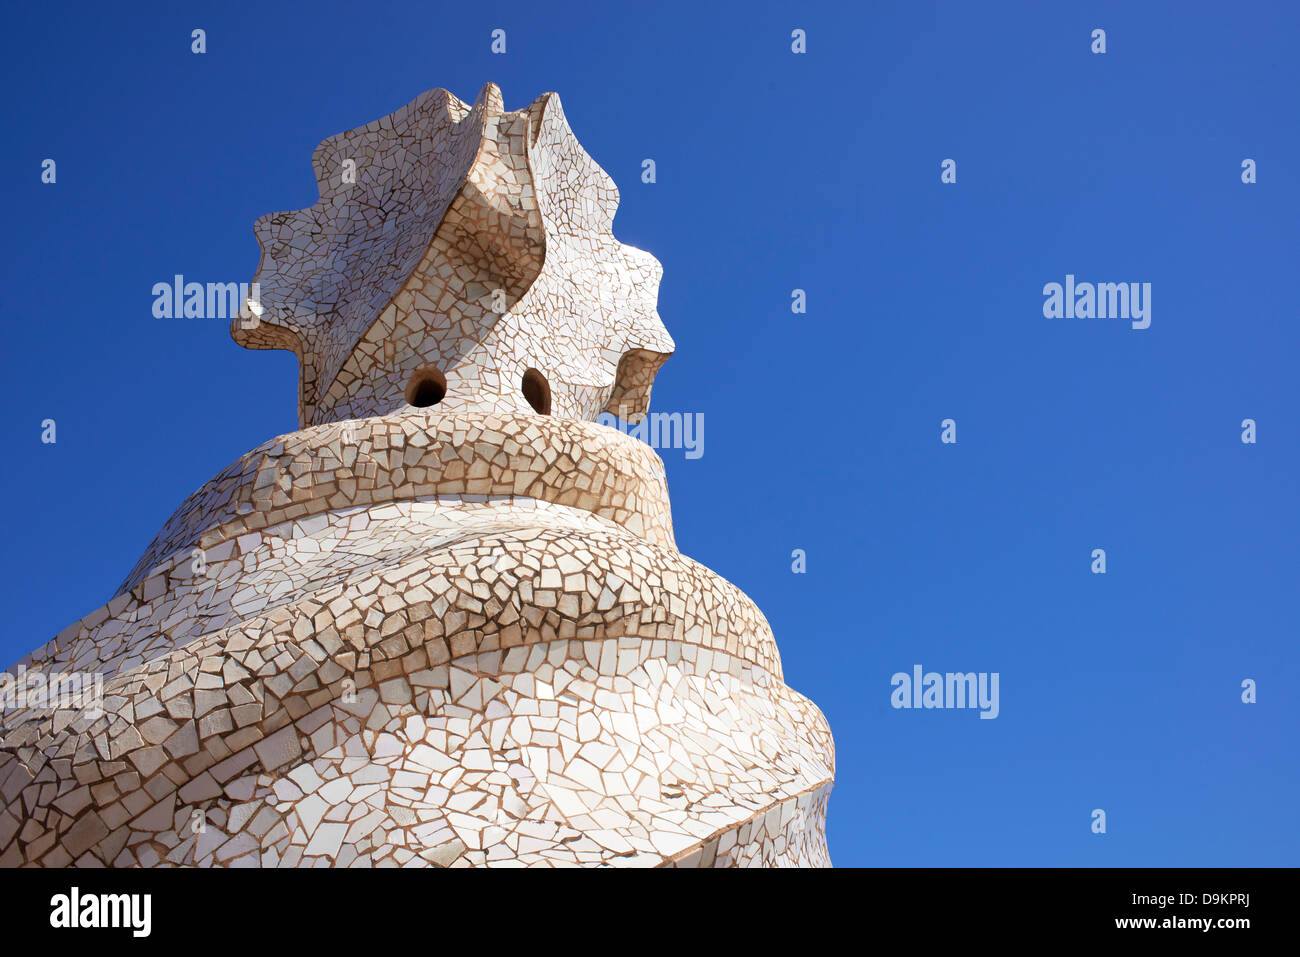 Kreative Architektur der Casa Mila, Barcelona, Spanien Stockfoto